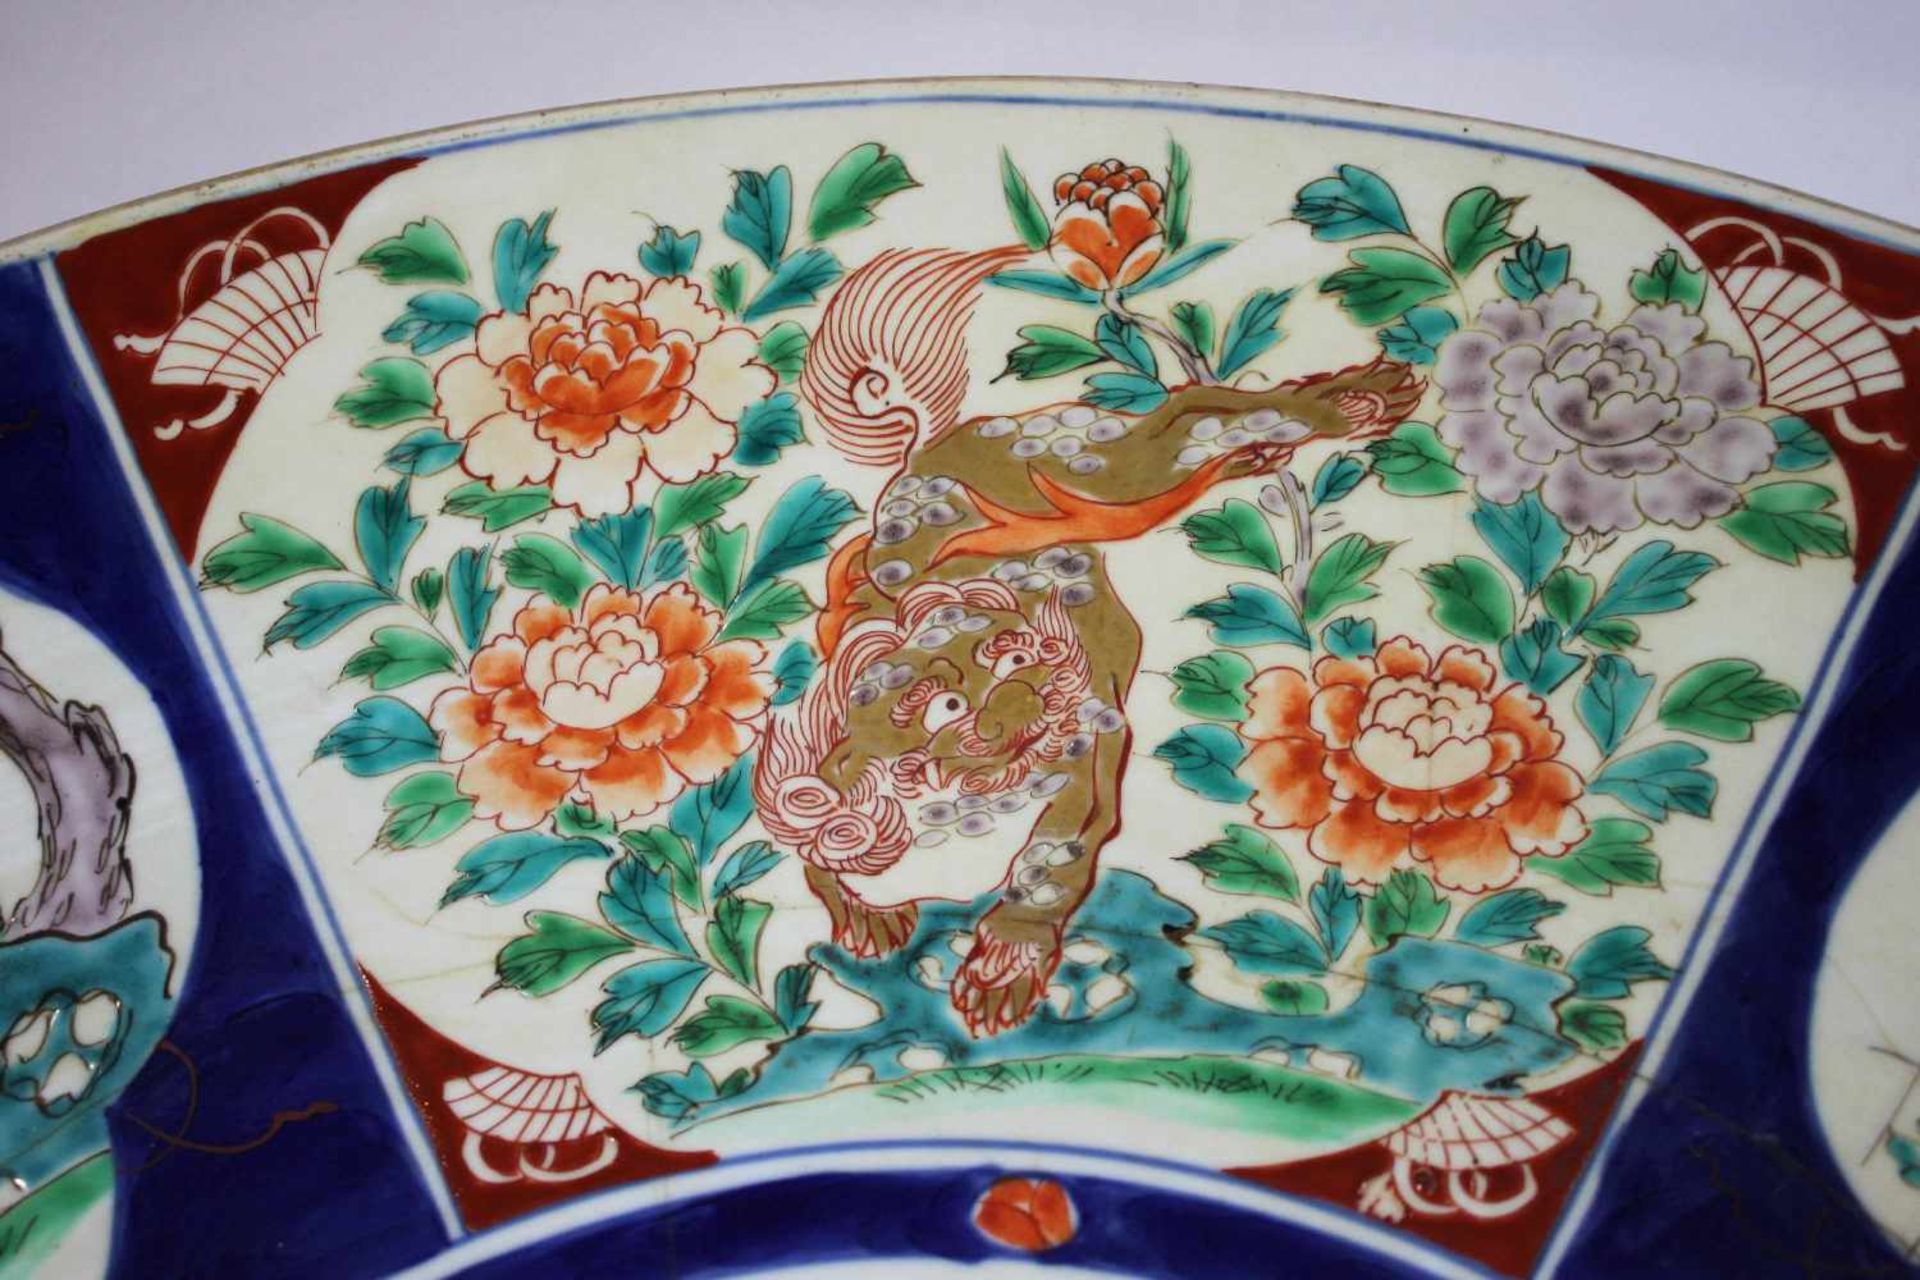 Großer Imari Porzellanteller, China, polychrom bemalt, Fu-Hund und Vogel Motiv, floraler Dekor - Bild 2 aus 3